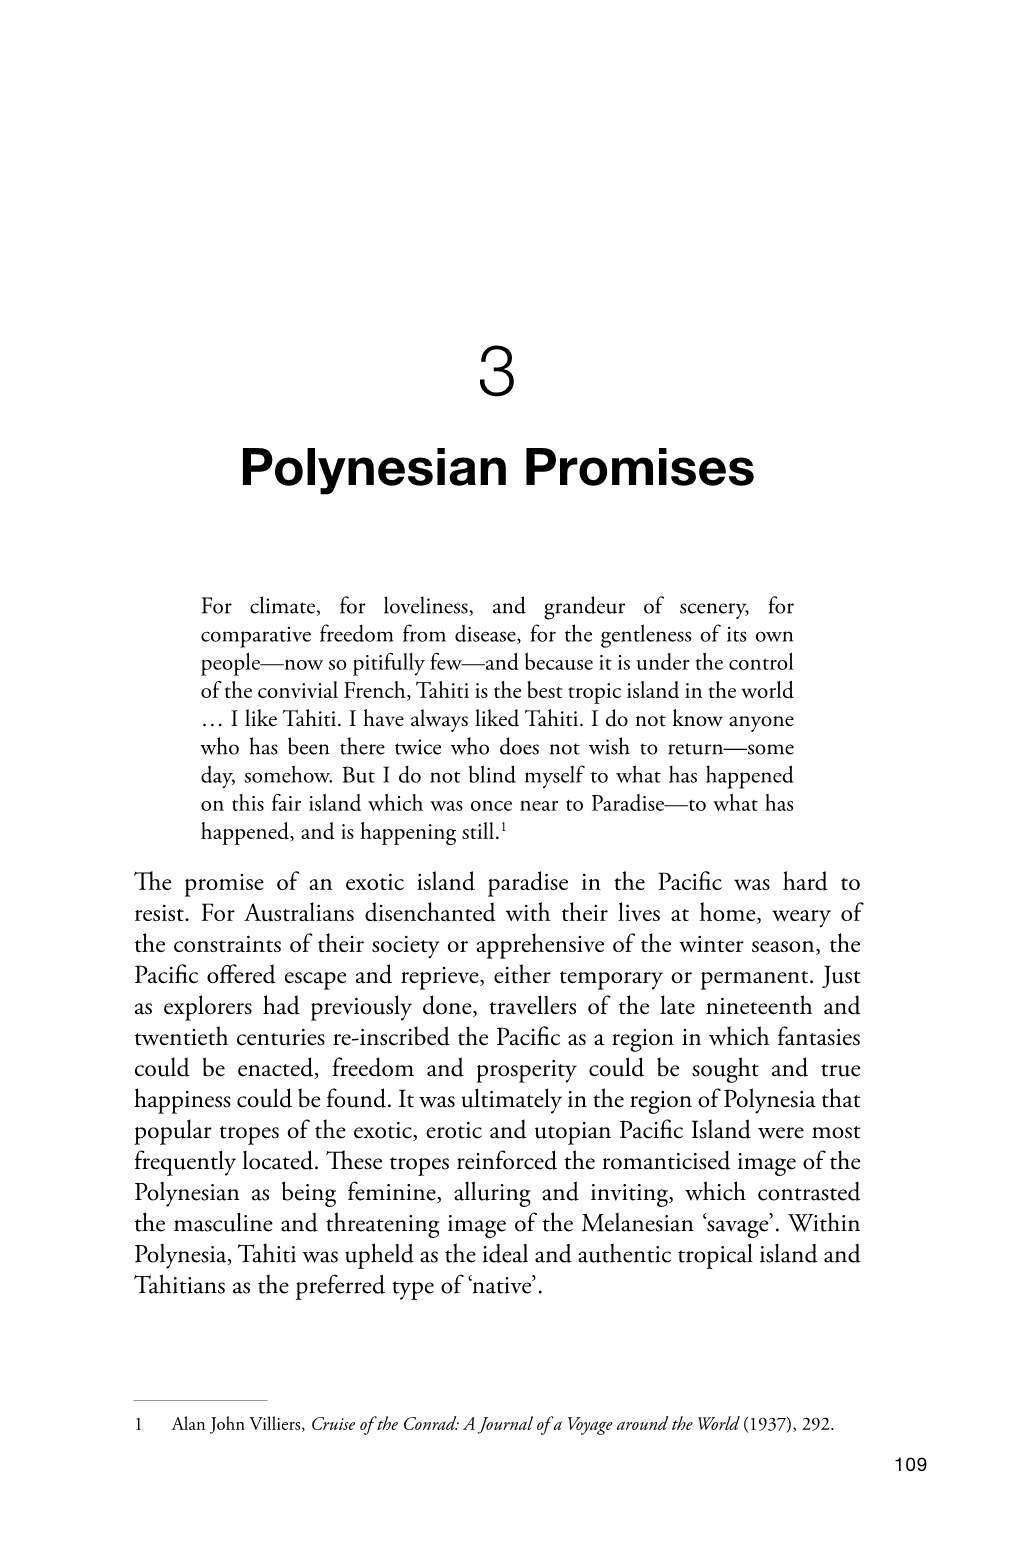 Polynesian Promises